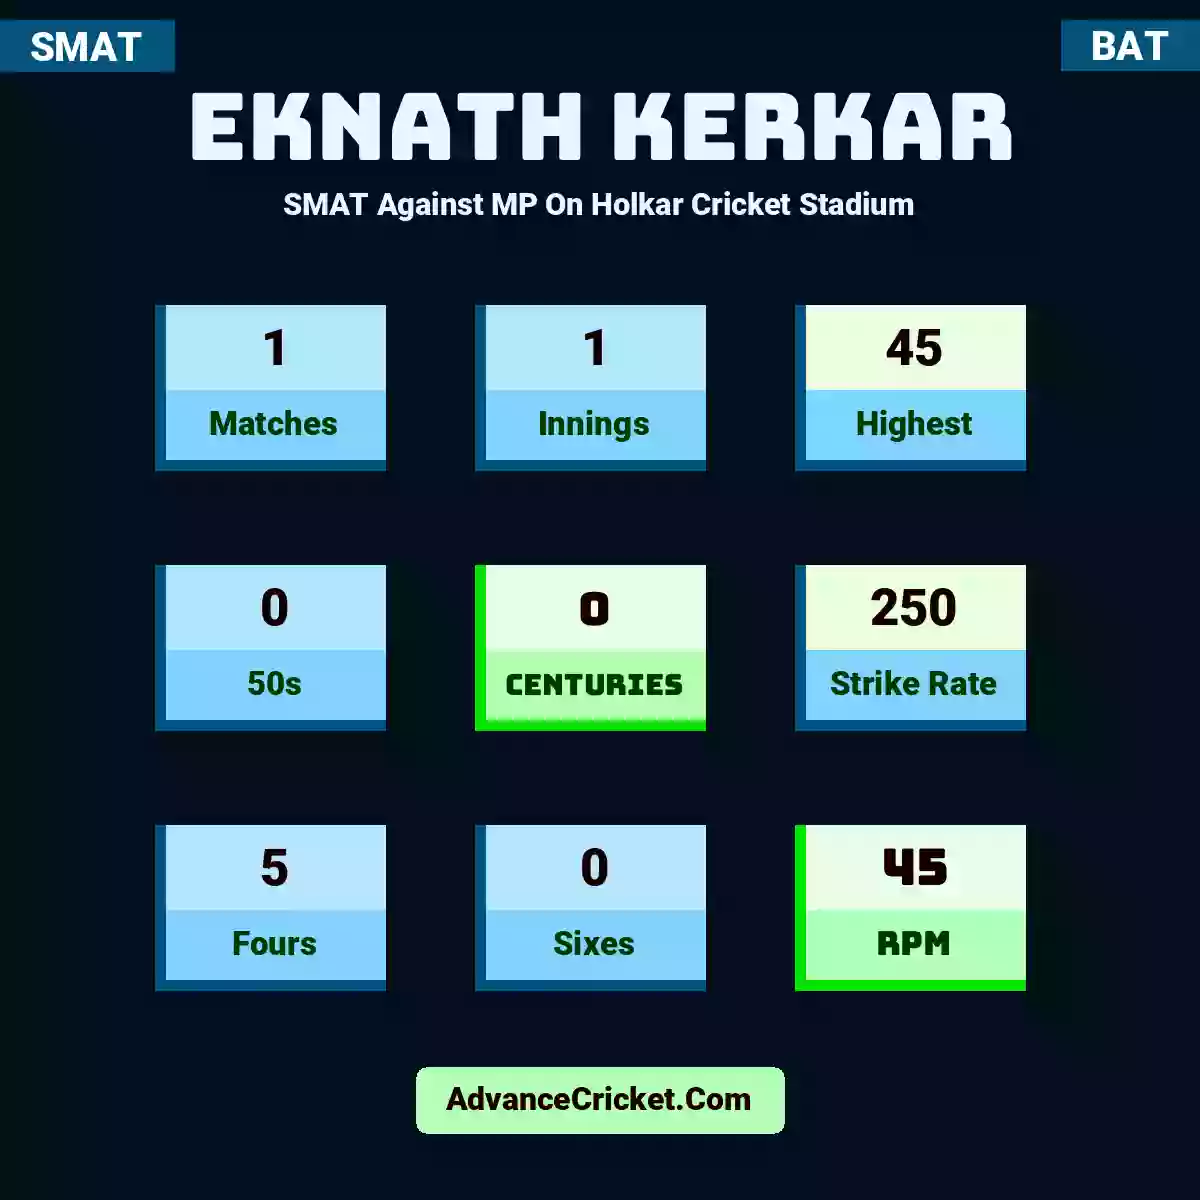 Eknath Kerkar SMAT  Against MP On Holkar Cricket Stadium, Eknath Kerkar played 1 matches, scored 45 runs as highest, 0 half-centuries, and 0 centuries, with a strike rate of 250. E.Kerkar hit 5 fours and 0 sixes, with an RPM of 45.